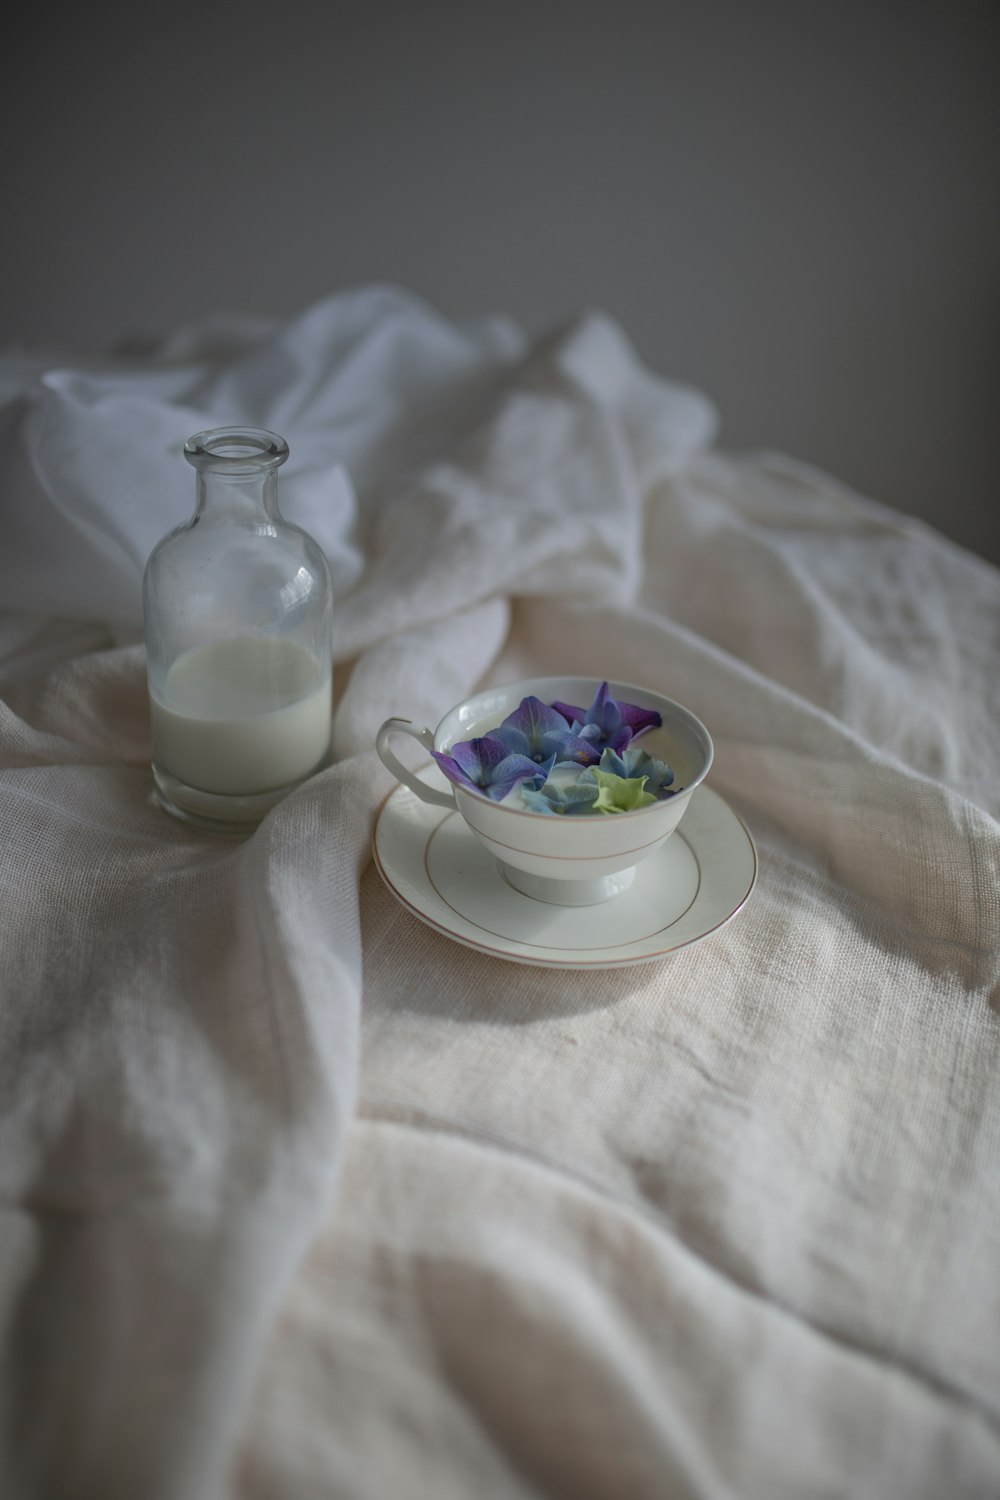 white ceramic bowl with purple flower inside